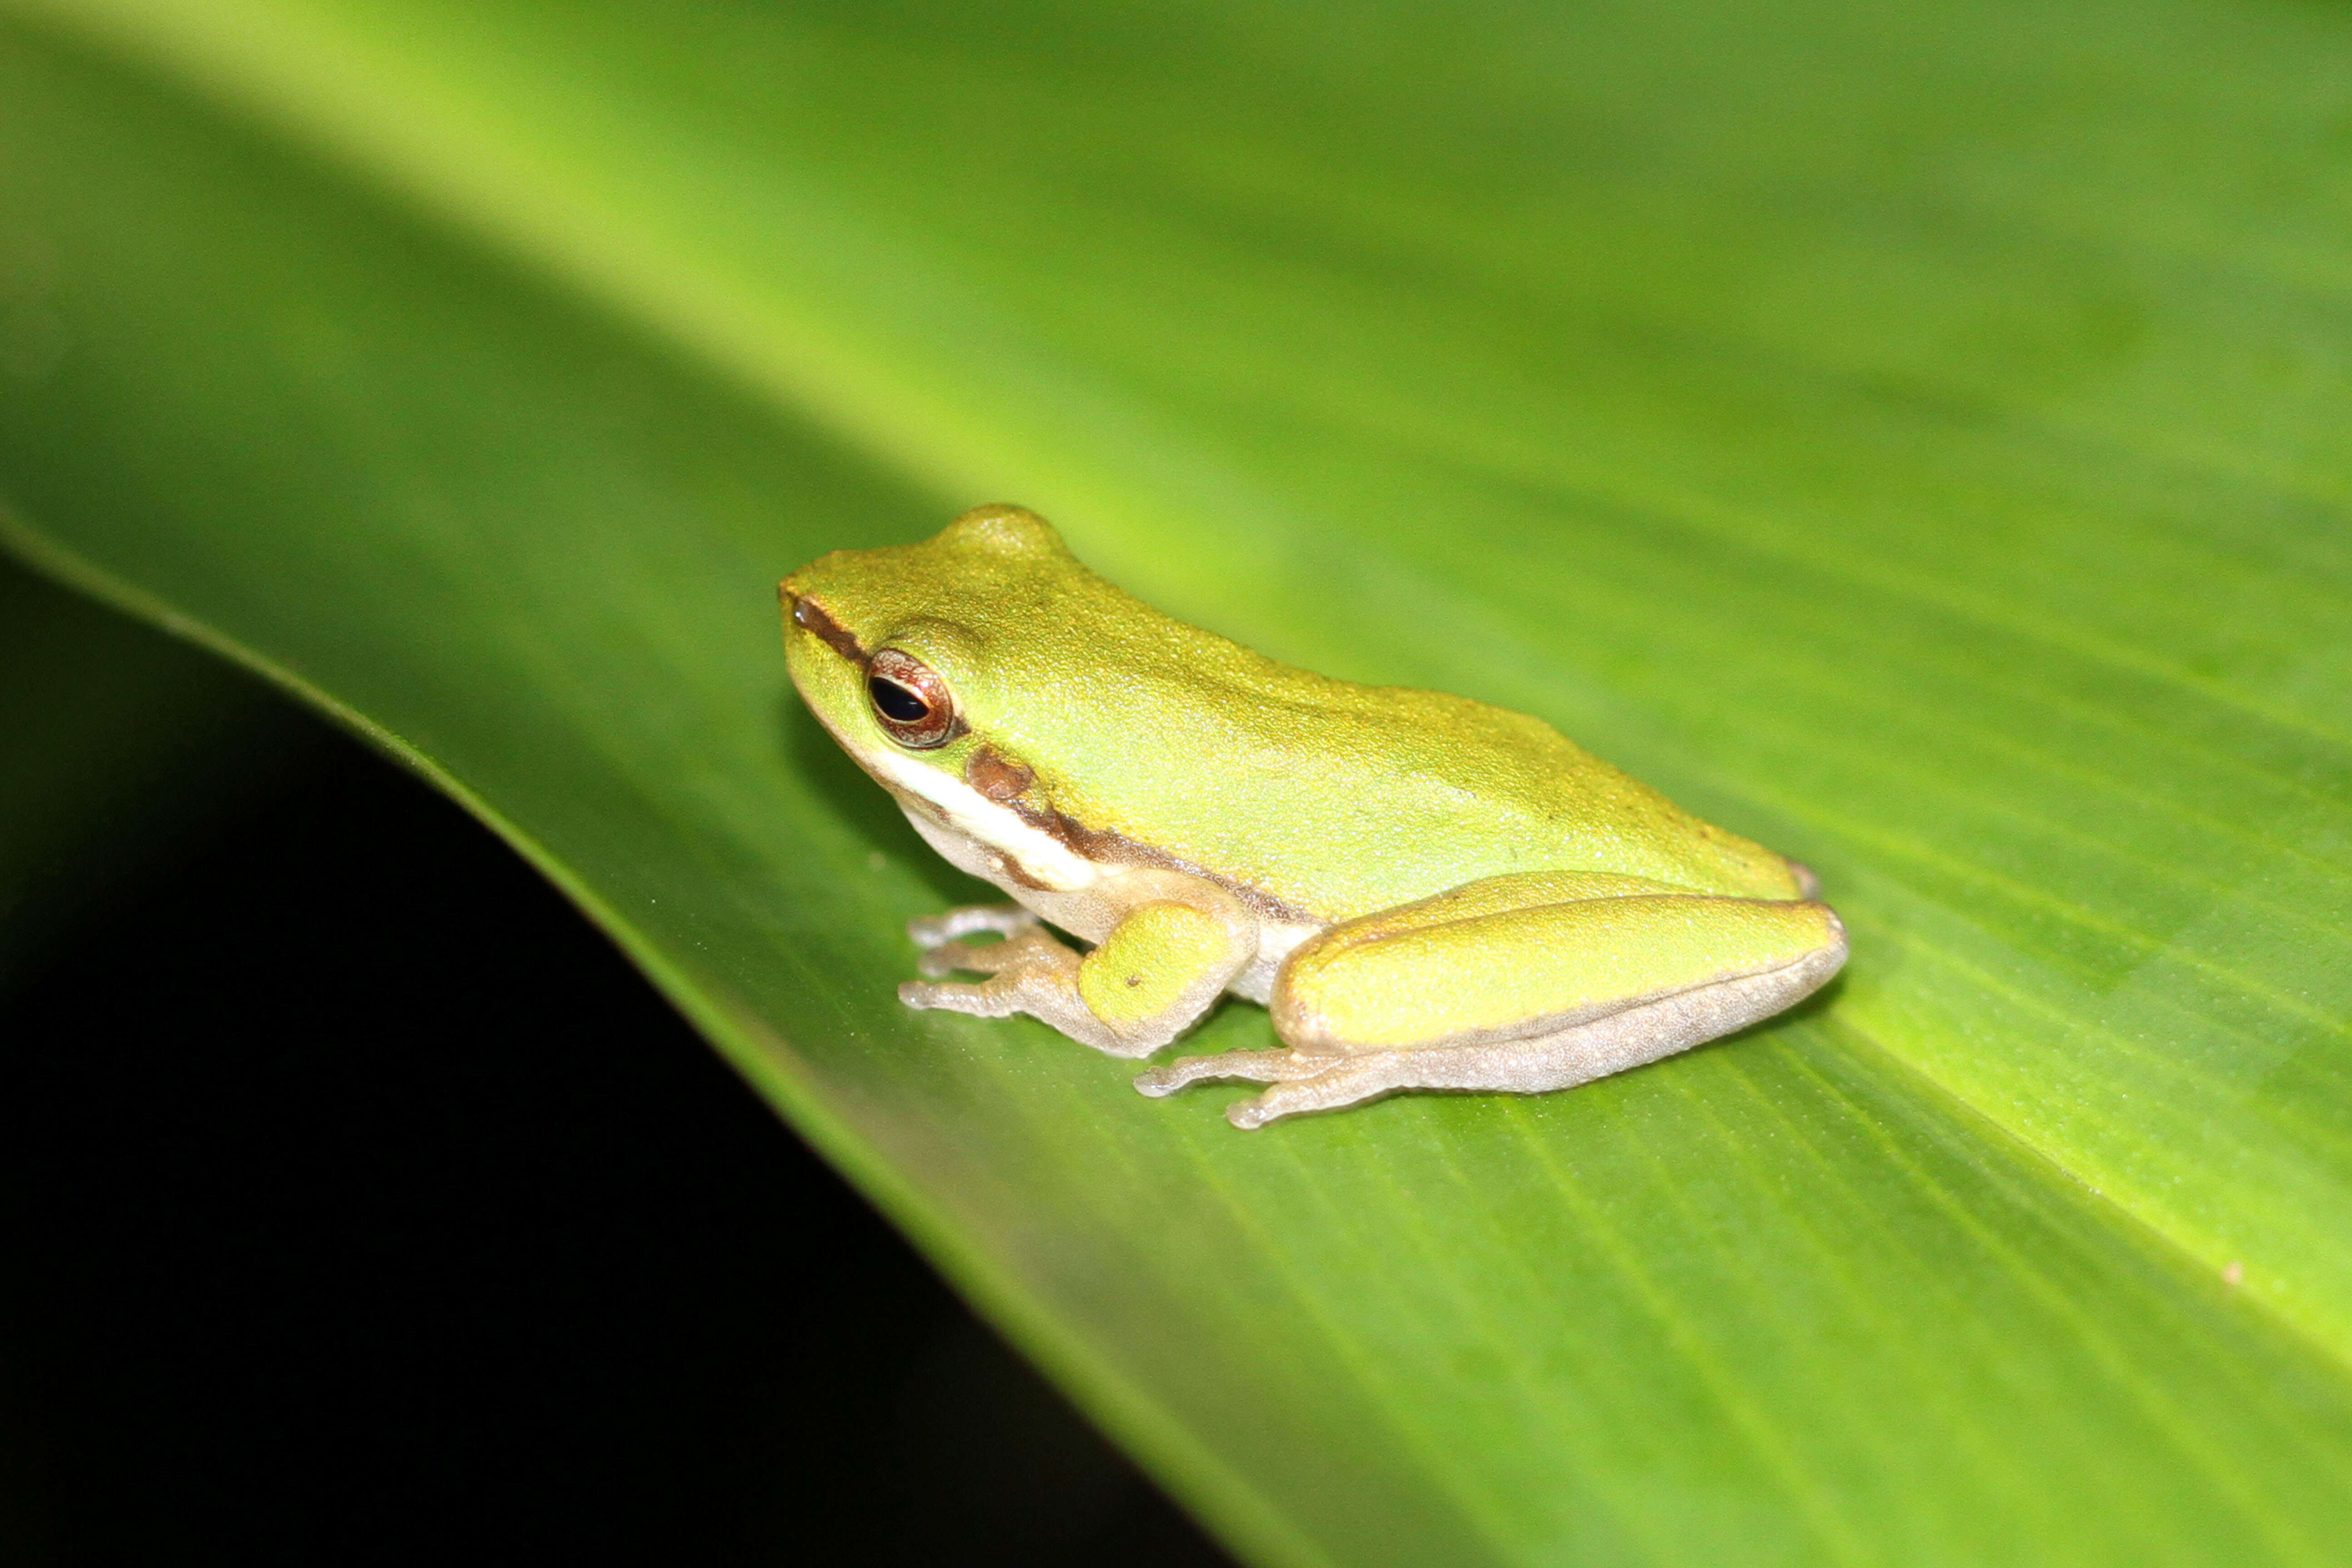 Image of Eastern Dwarf Tree Frog